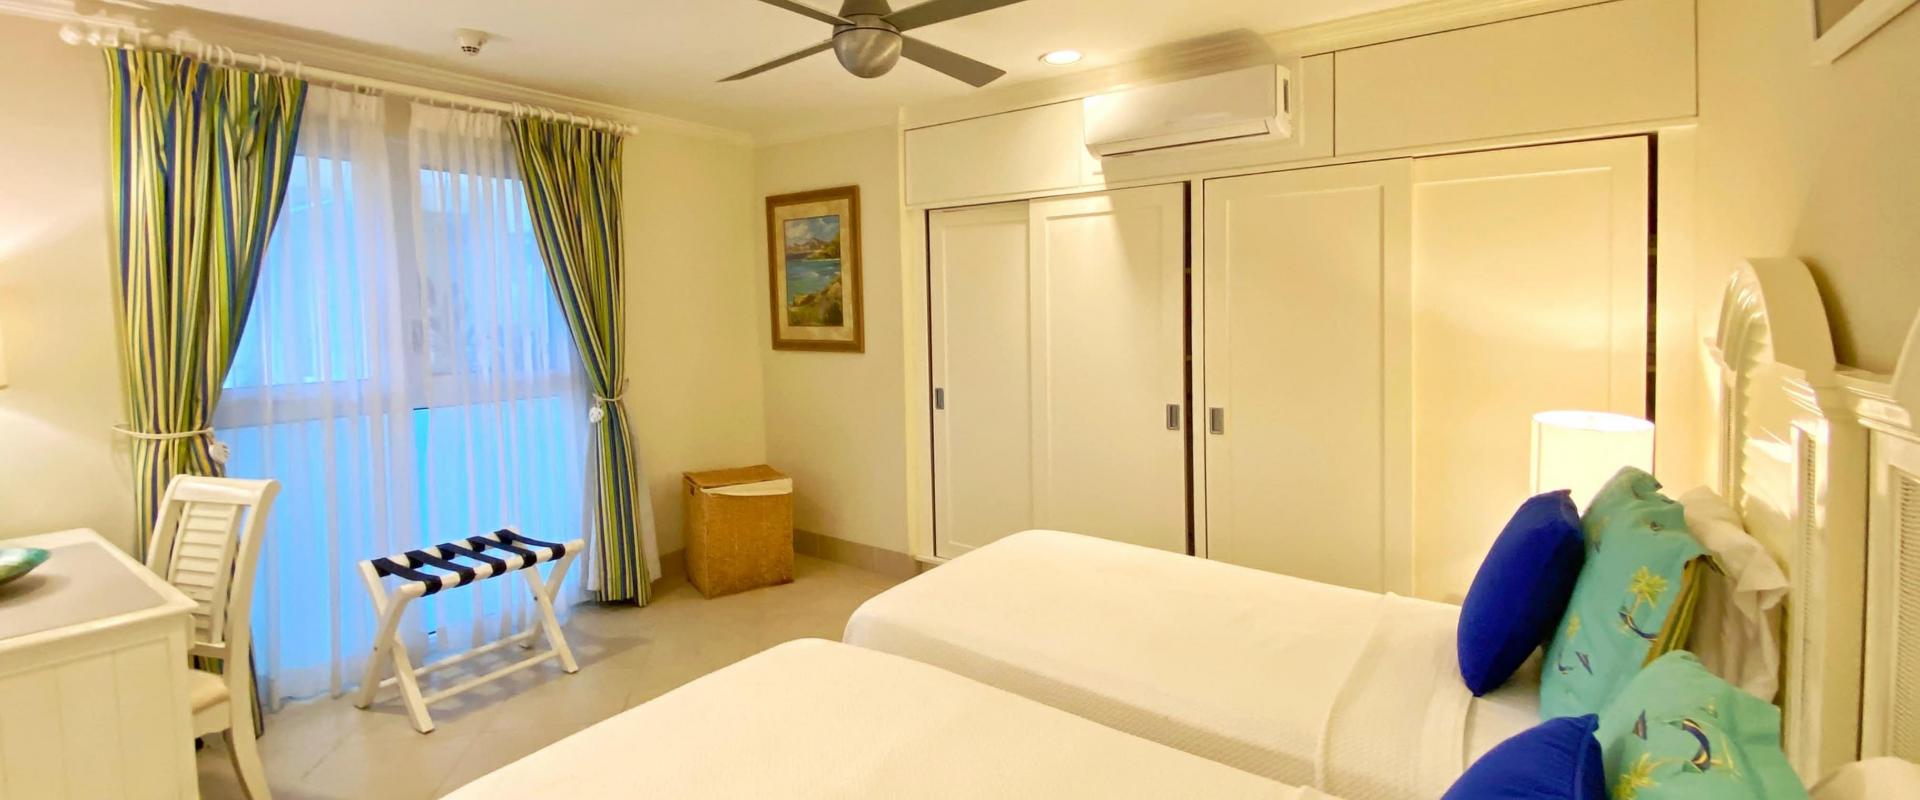 Palm Beach 211 Barbados Beachfront Vacation Condo Rental Bedroom 2 View Towards Window